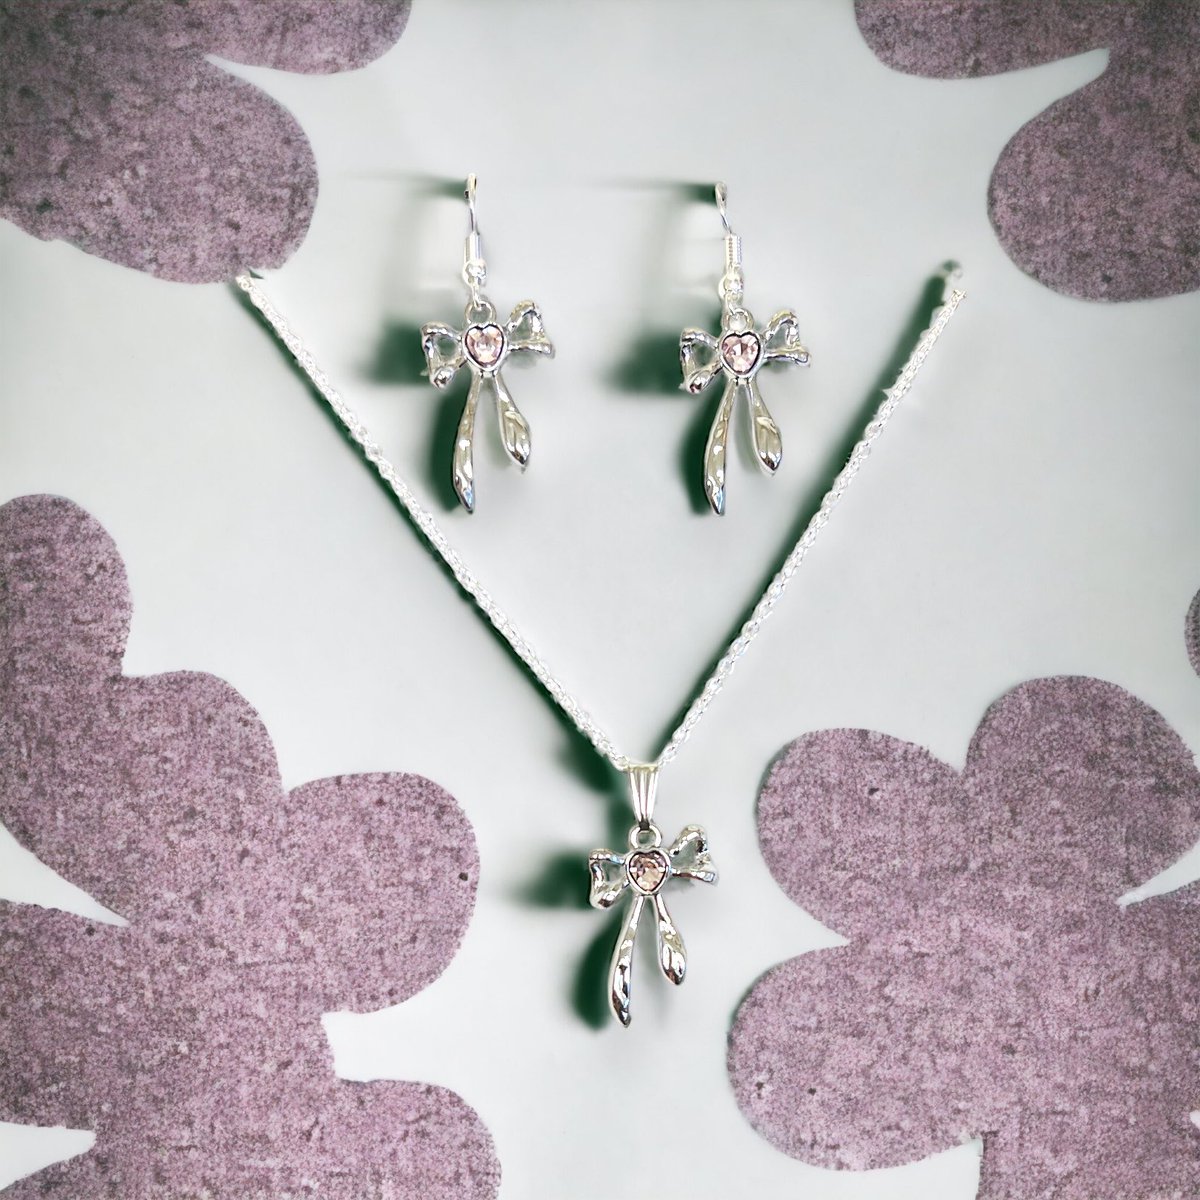 Shiny Silver Bow Pink Heart Rhinestone Necklace and Earrings Set

gemsandstitchery.etsy.com/listing/160533…

#EtsyStarSeller #handmadejewelry #smallbusinessbigdreams #earringsoftheday #jewelrydesigner #etsyseller #earringshandmade #jewelryoftheday #christmasjewellery